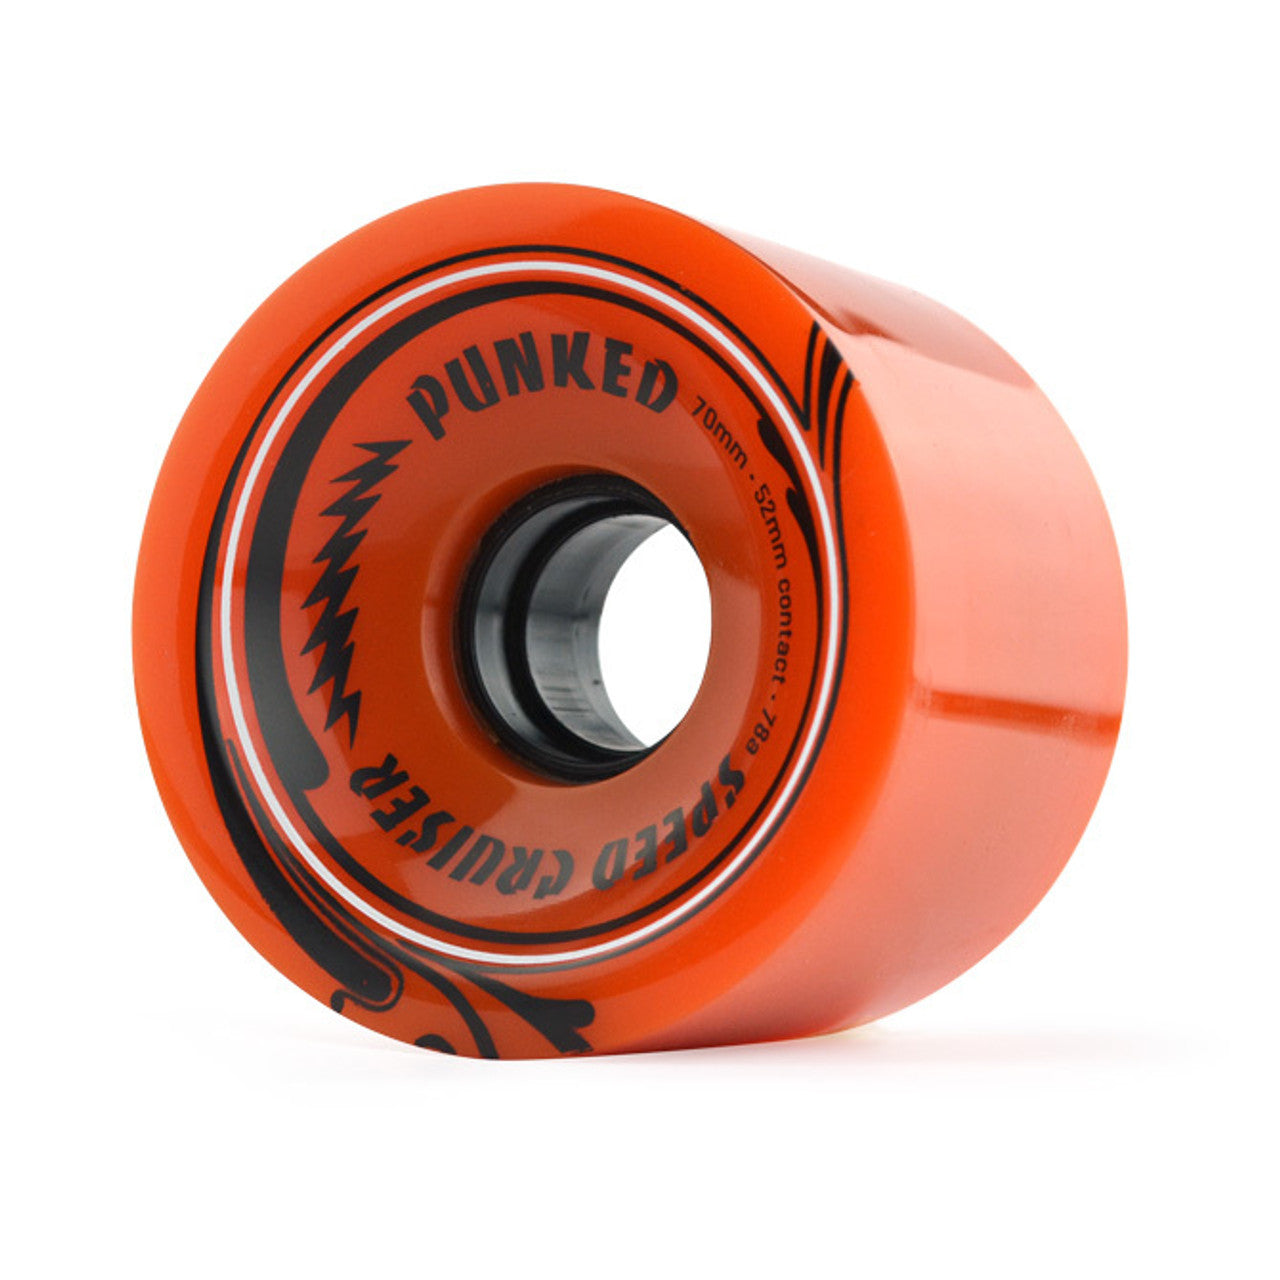 Speed Cruiser 70mm Longboard Wheels - Solid Orange